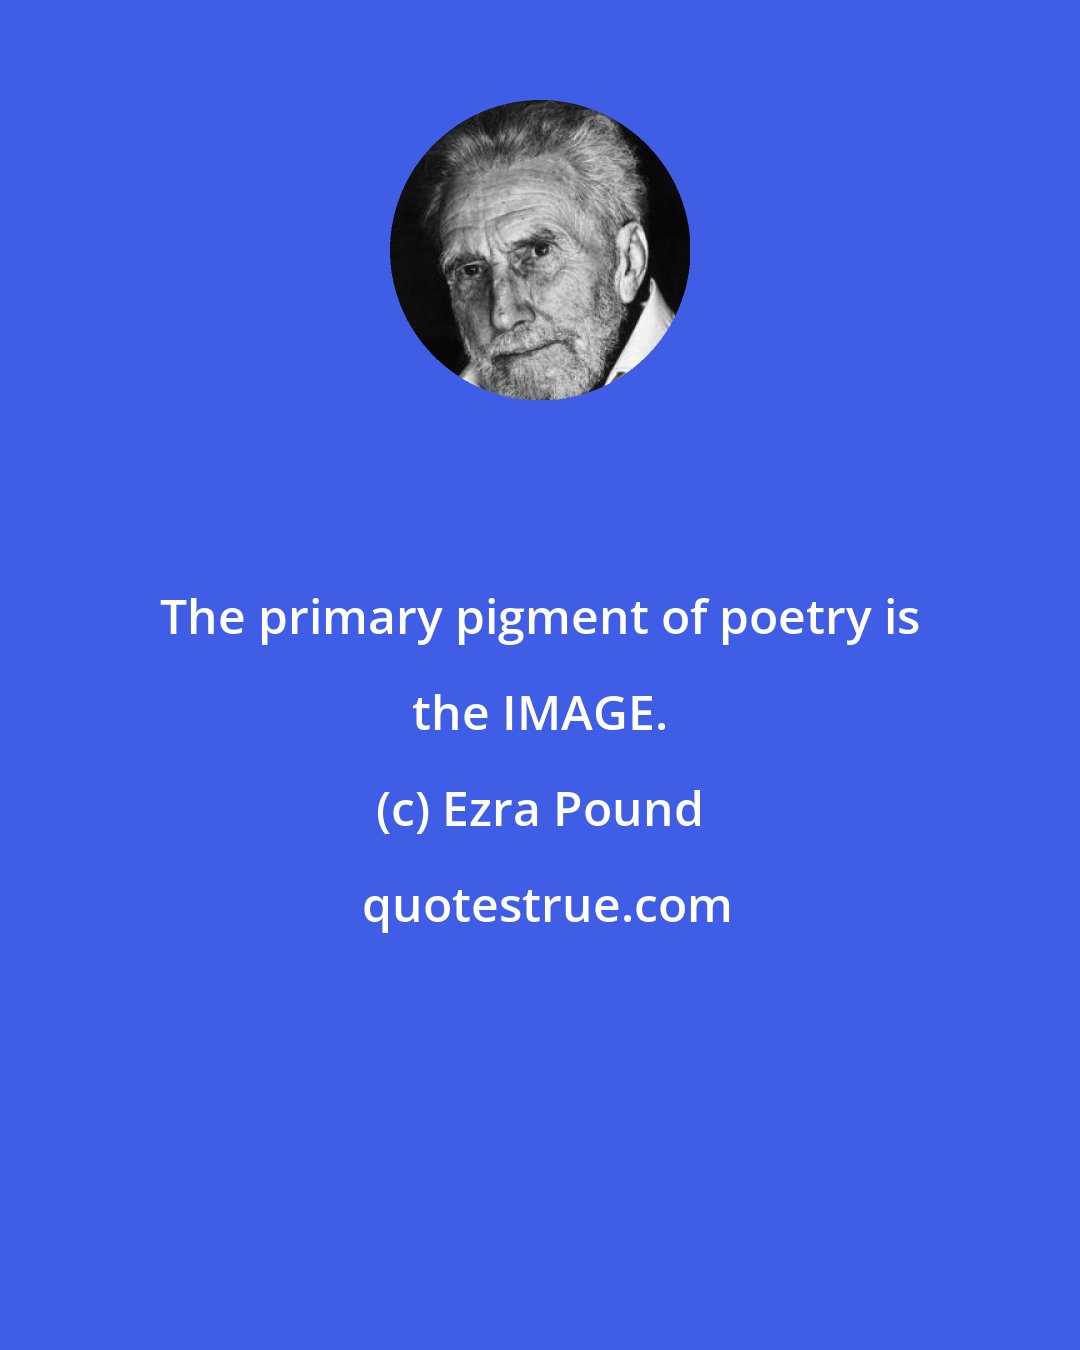 Ezra Pound: The primary pigment of poetry is the IMAGE.